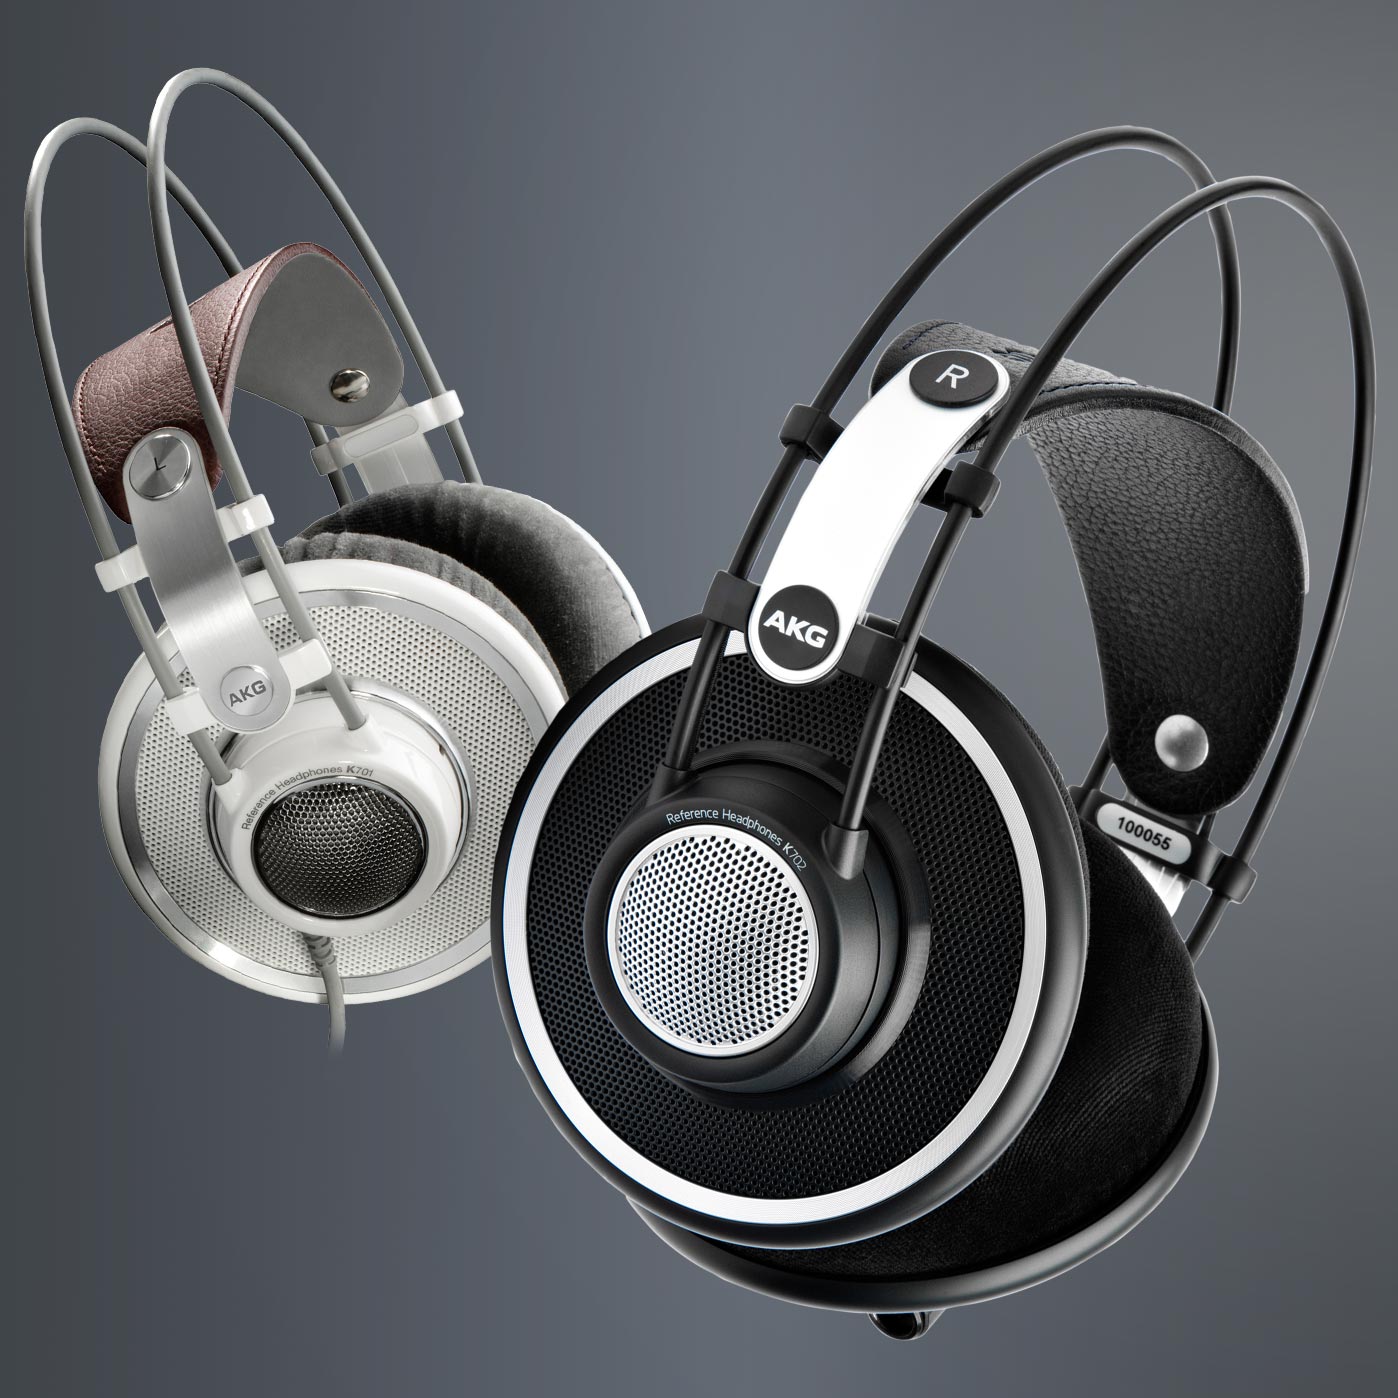 AKG 702 Reference Studio Headphones